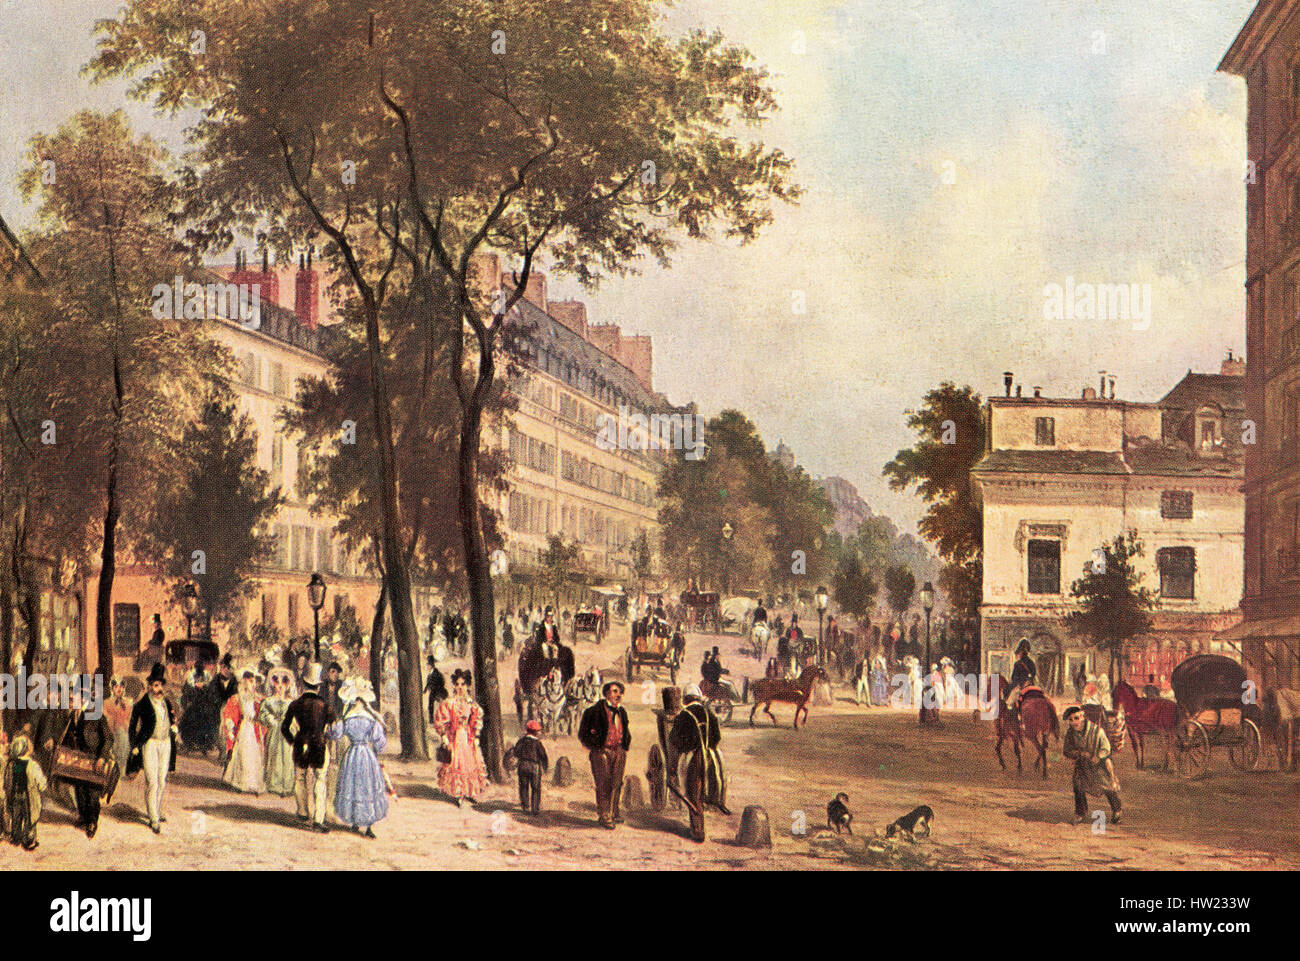 Montmartre historical fotografías e imágenes de alta resolución - Alamy